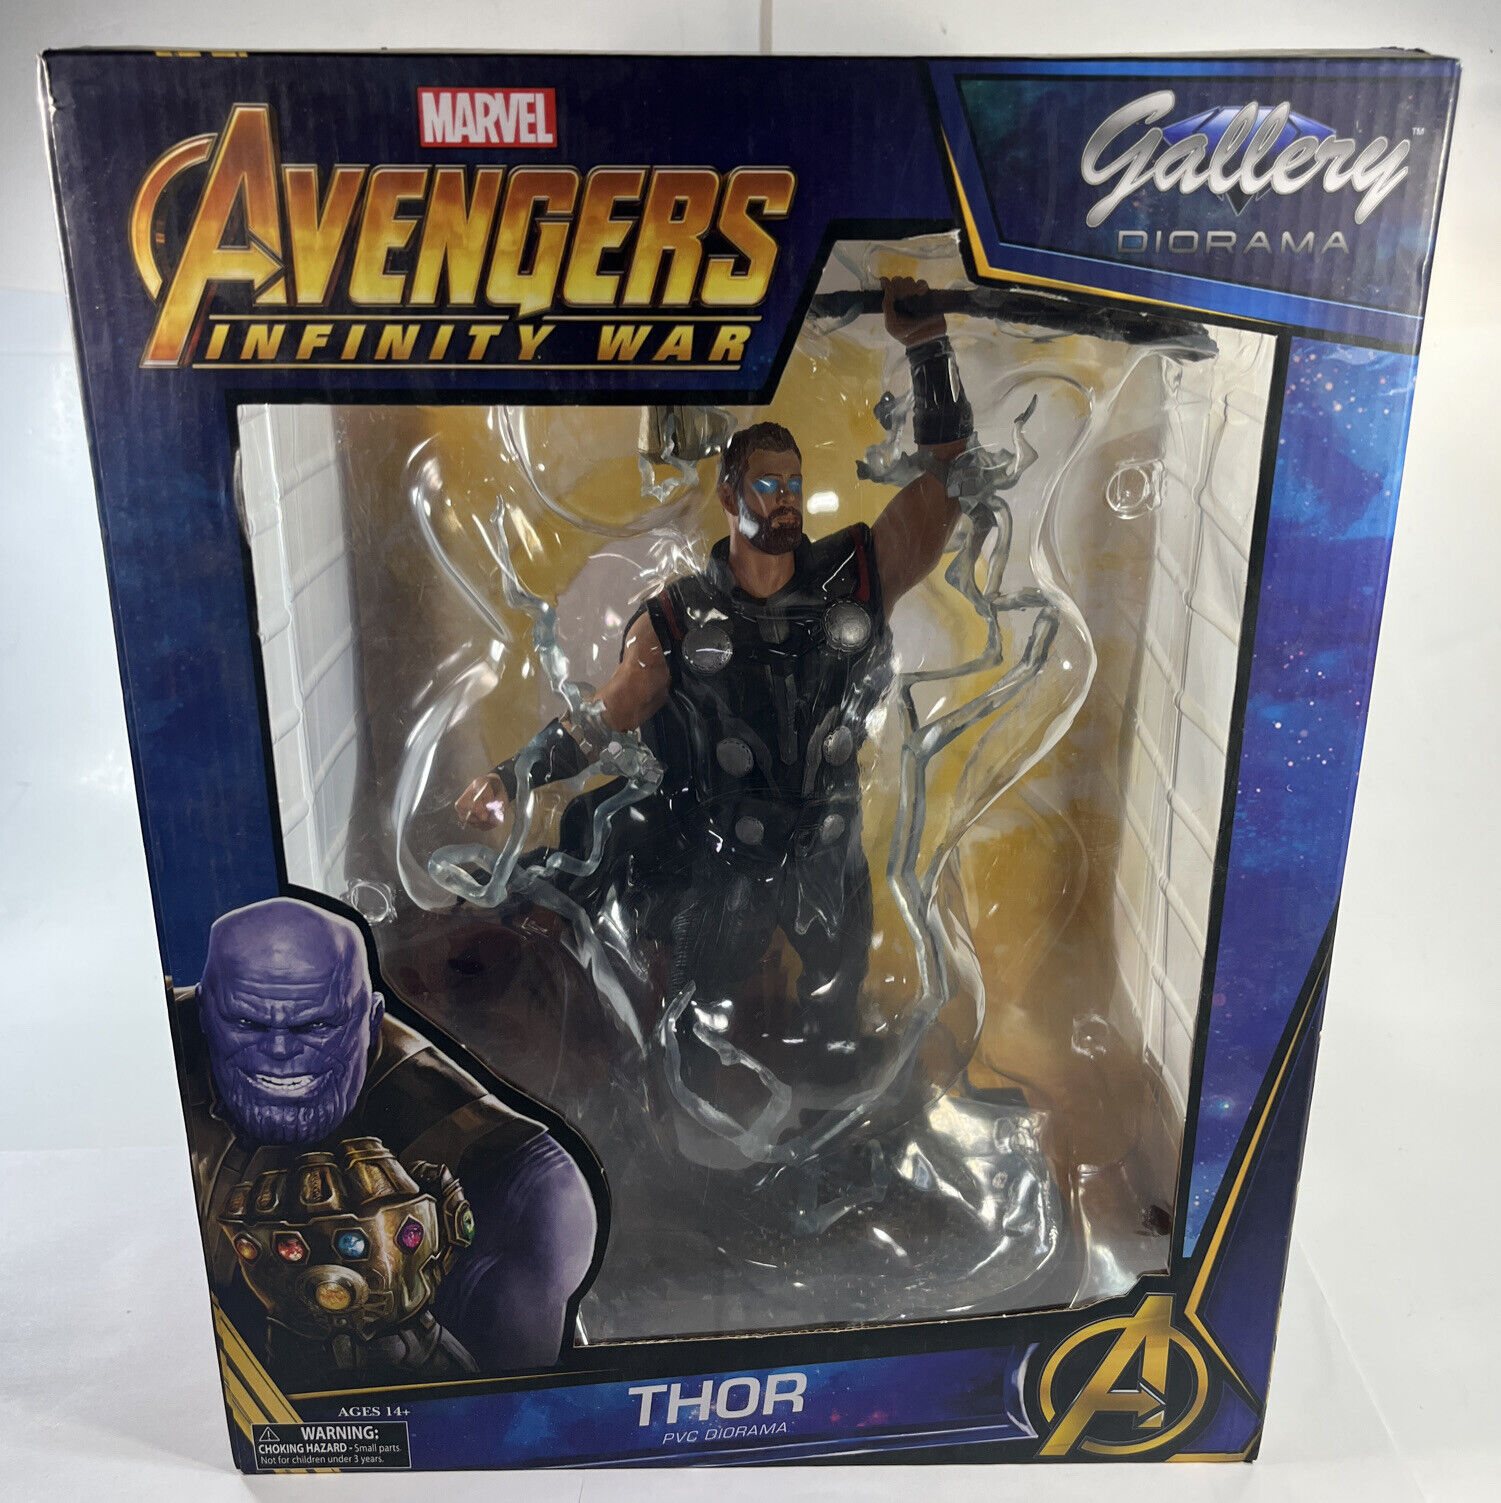 Avengers Infinity War Movie Thor PVC Diorama Figure Statue Diamond Select Marvel